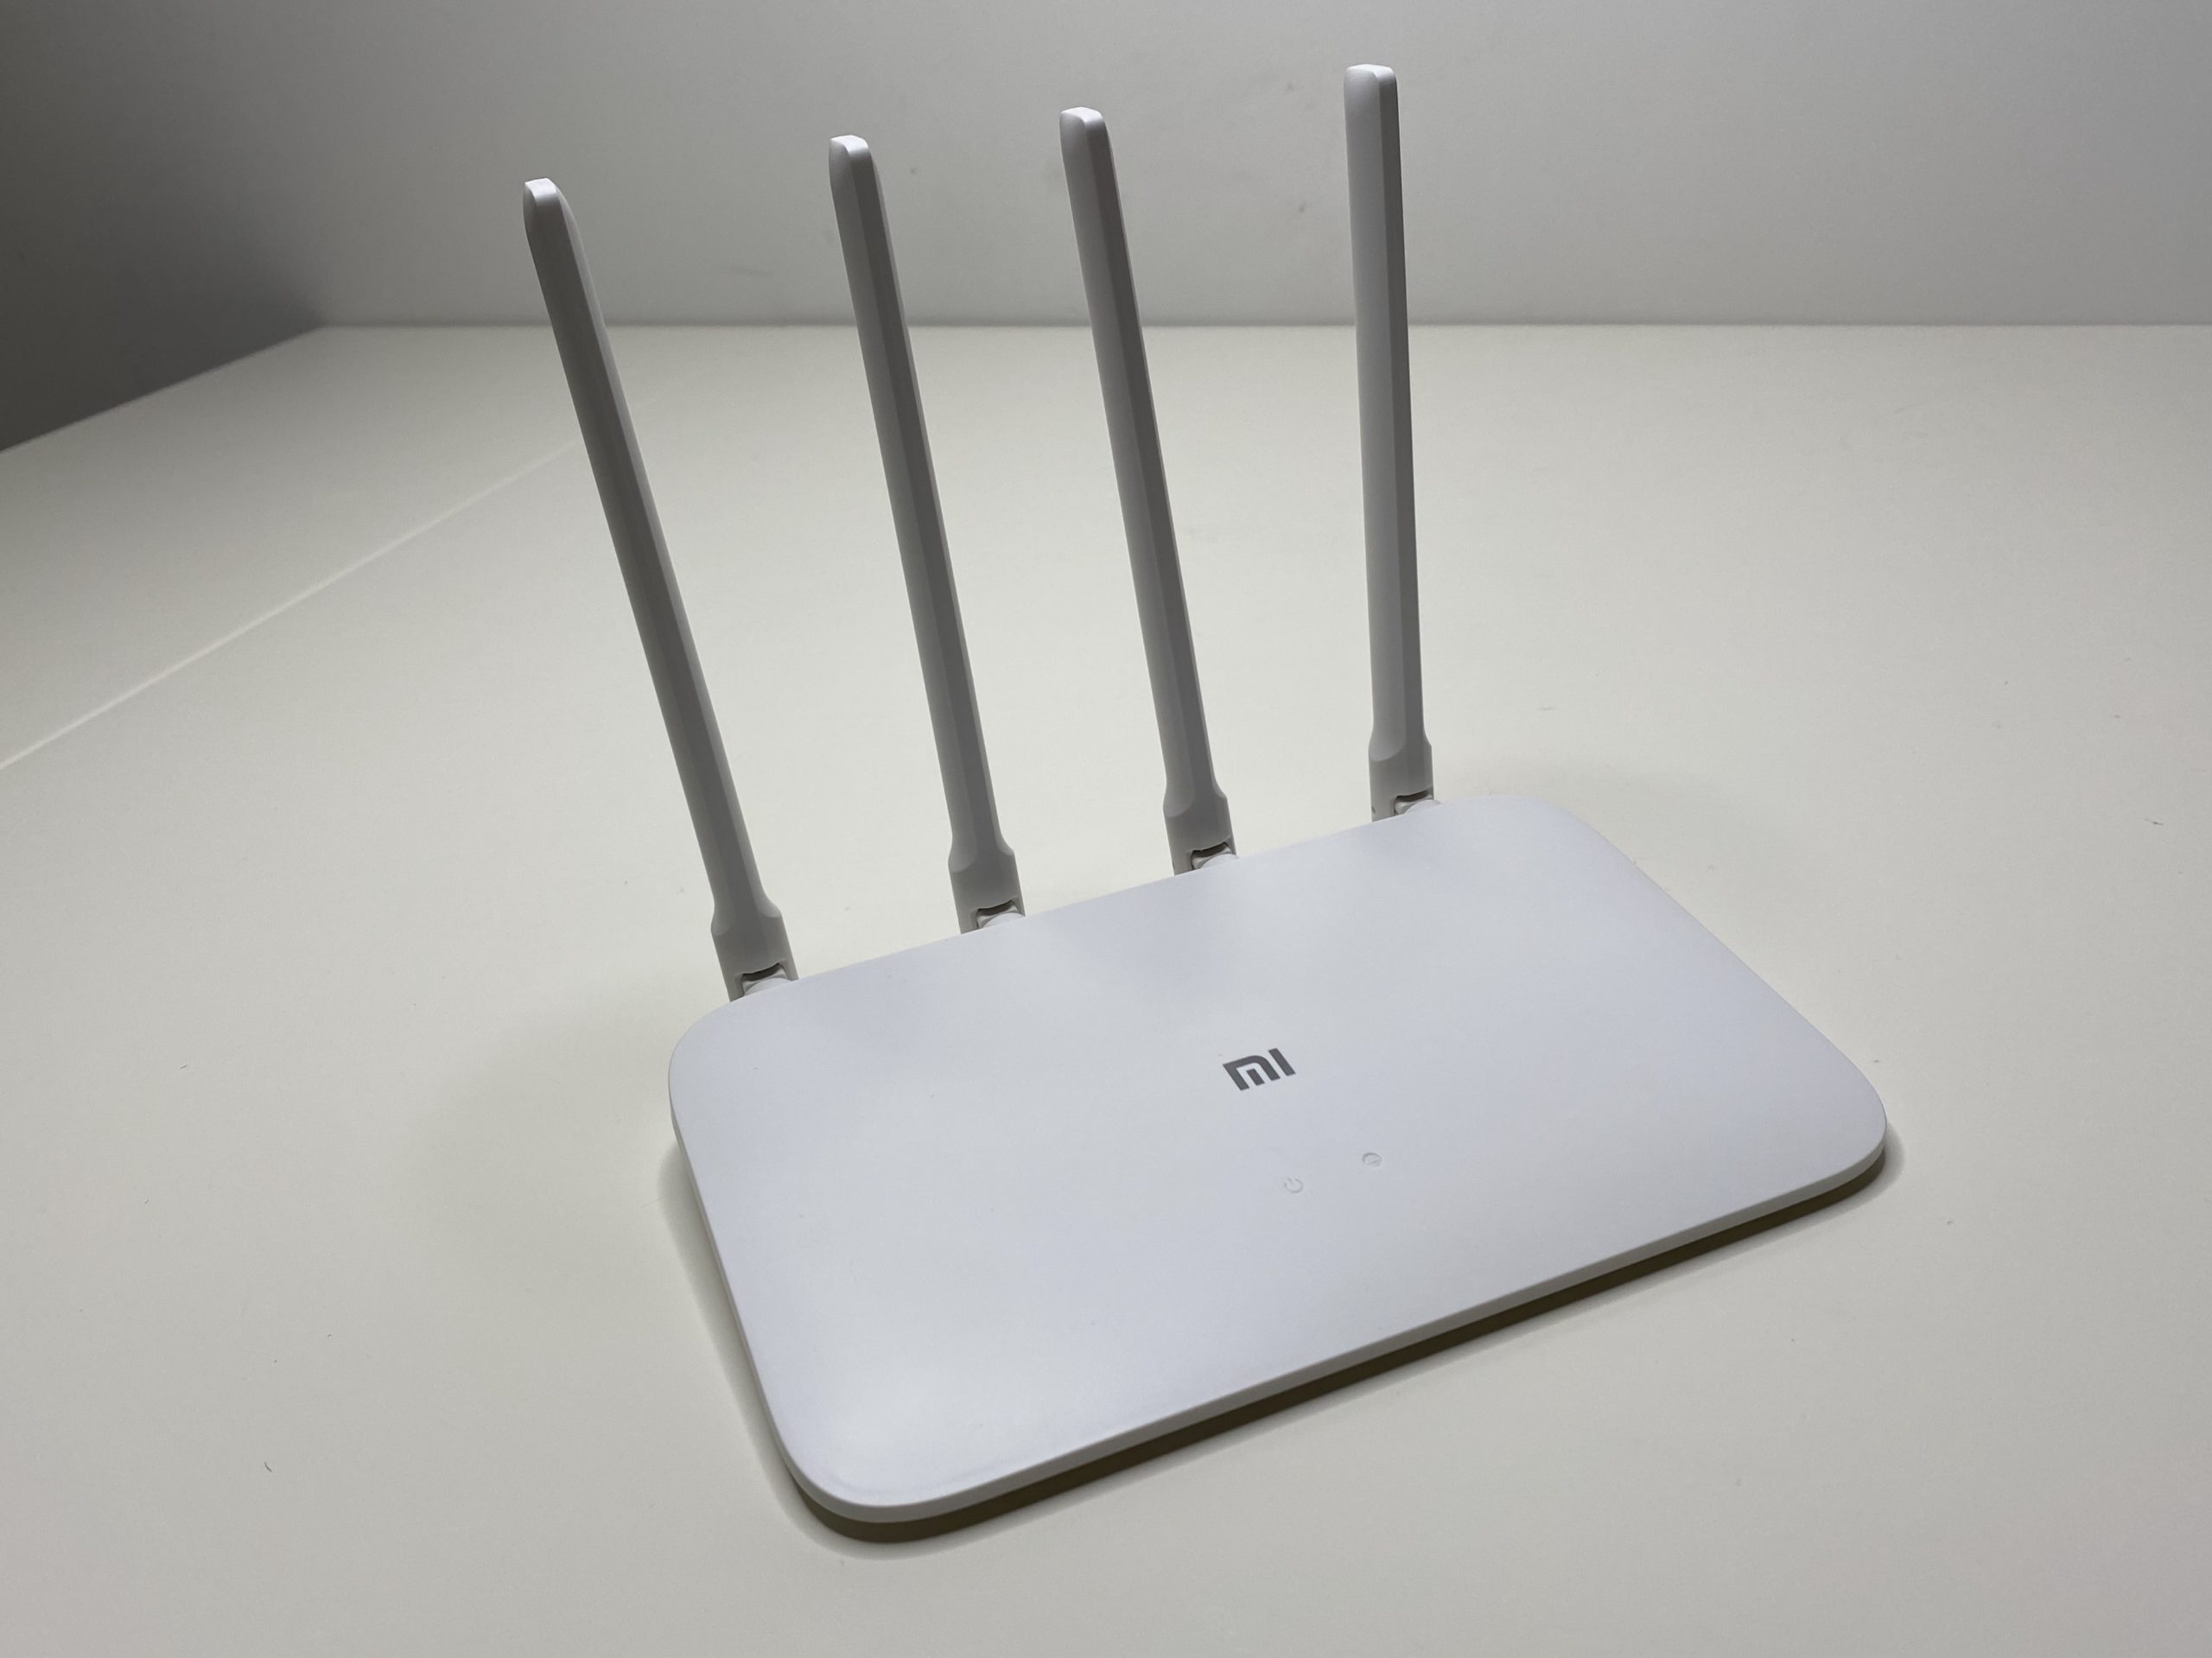 Wifi router 4a gigabit. Xiaomi mi 4a роутер. Роутер Xiaomi 4a Gigabit. Роутер Xiaomi mi Router 4a. Xiaomi mi WIFI Router 4a Gigabit Edition.